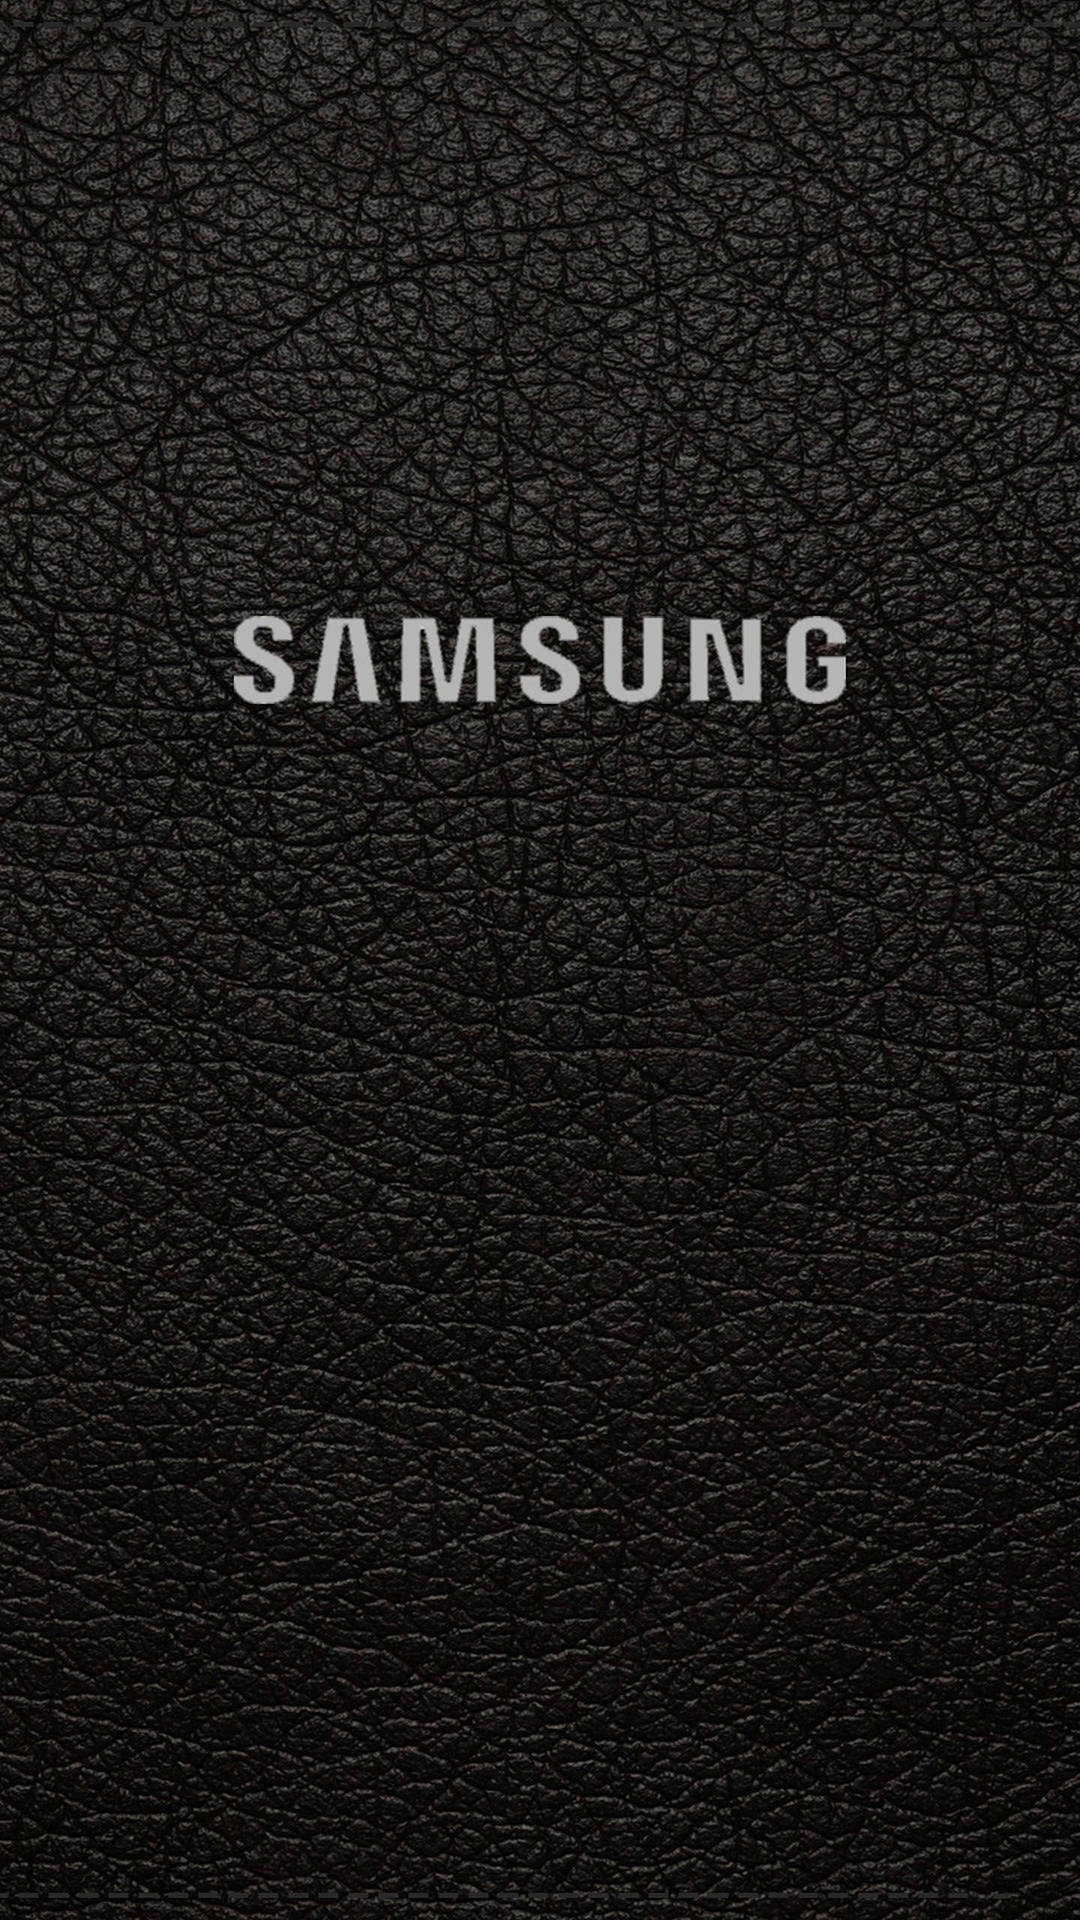 Samsung Mobile Logo On Leather